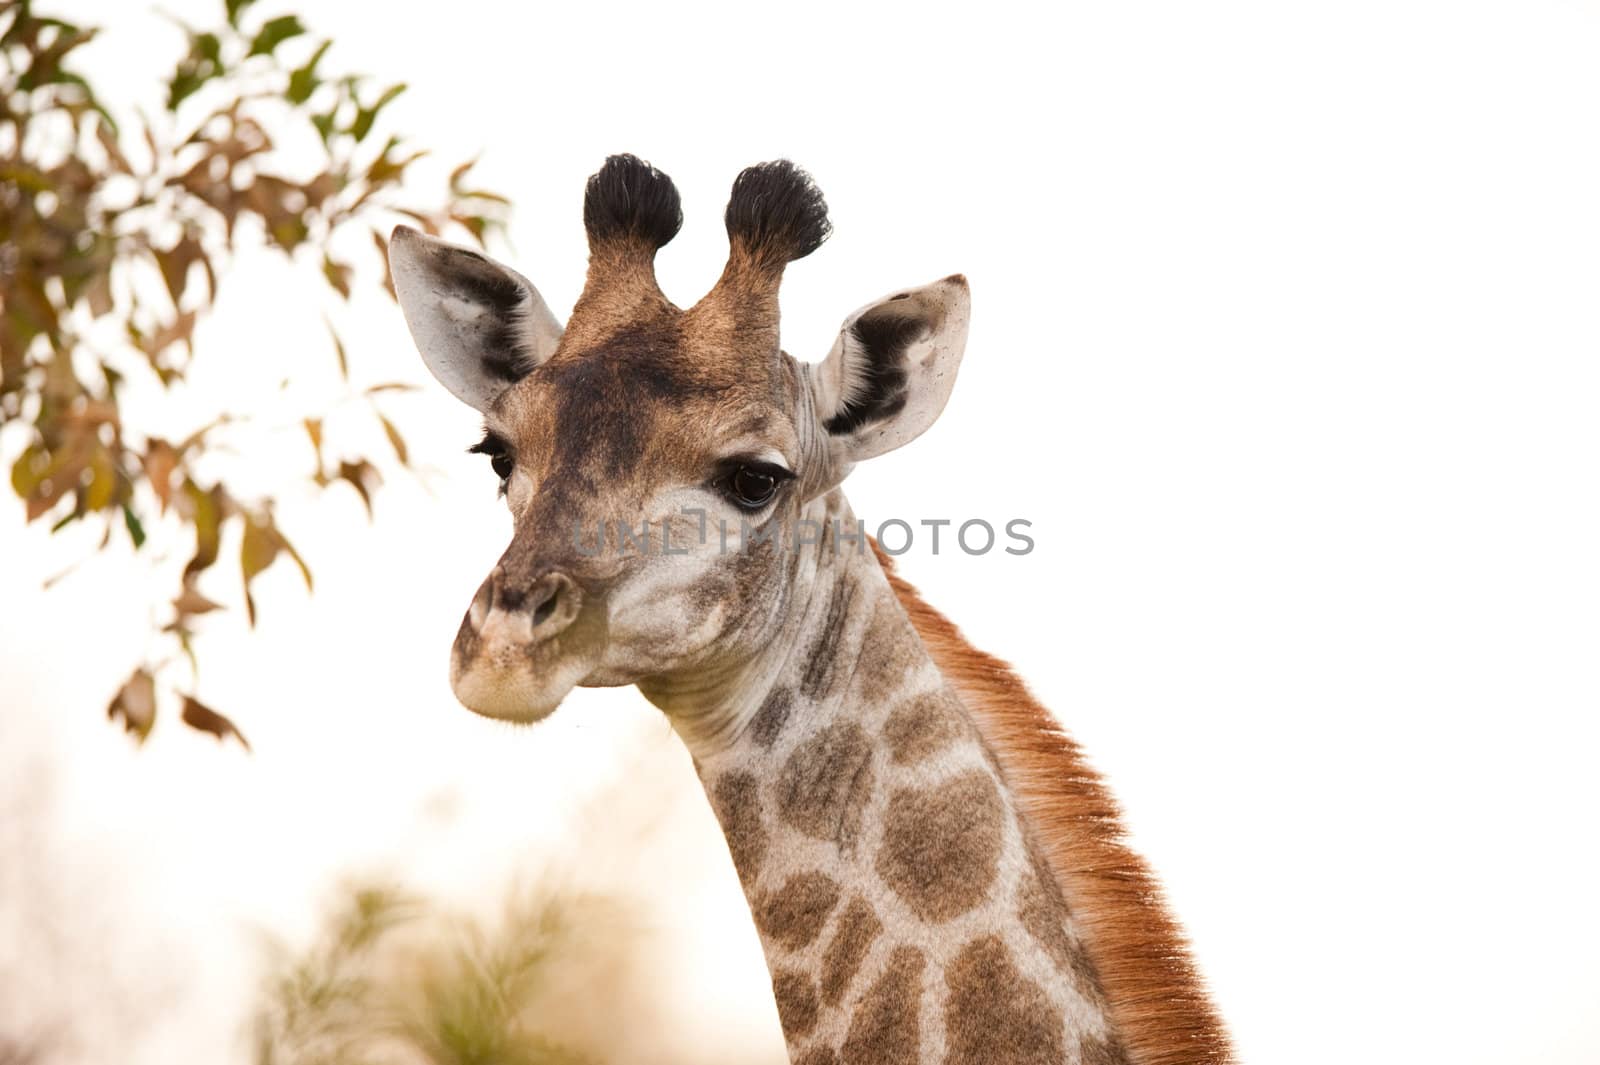 GIRAFFE (Giraffa camelopardalis) up close by edan